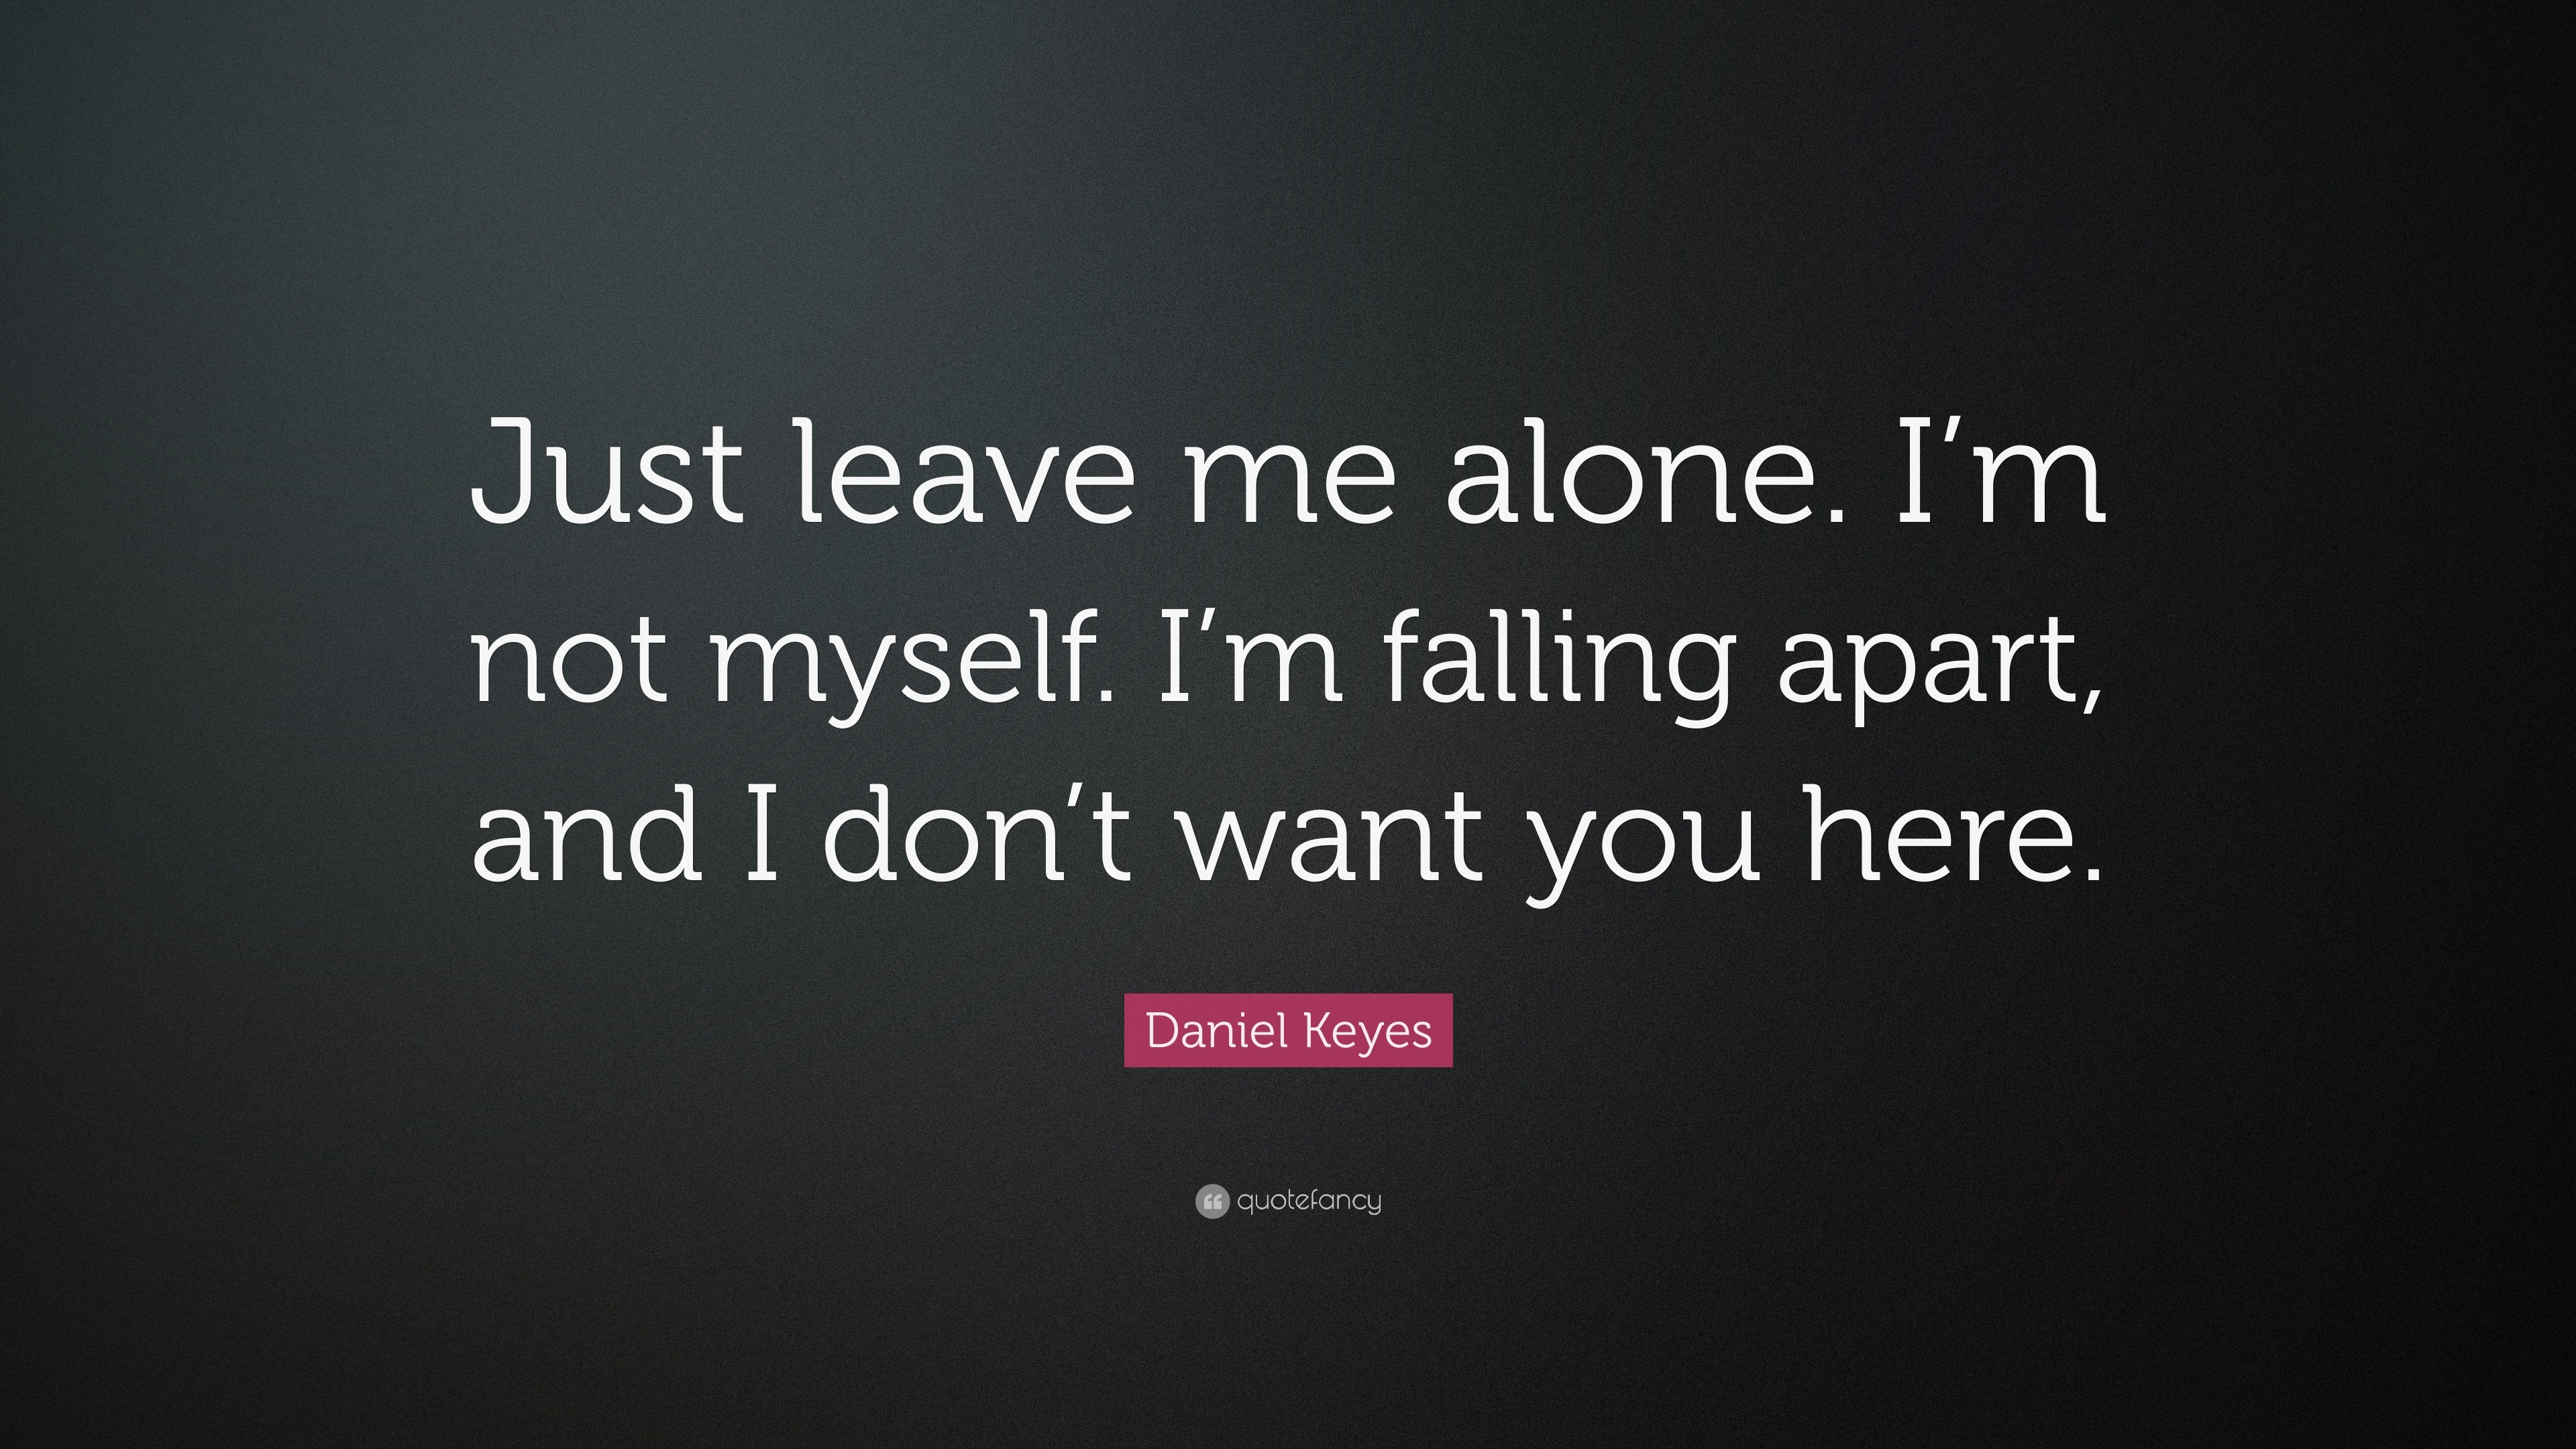 Daniel Keyes Quote “Just leave me alone. I’m not myself. I’m falling